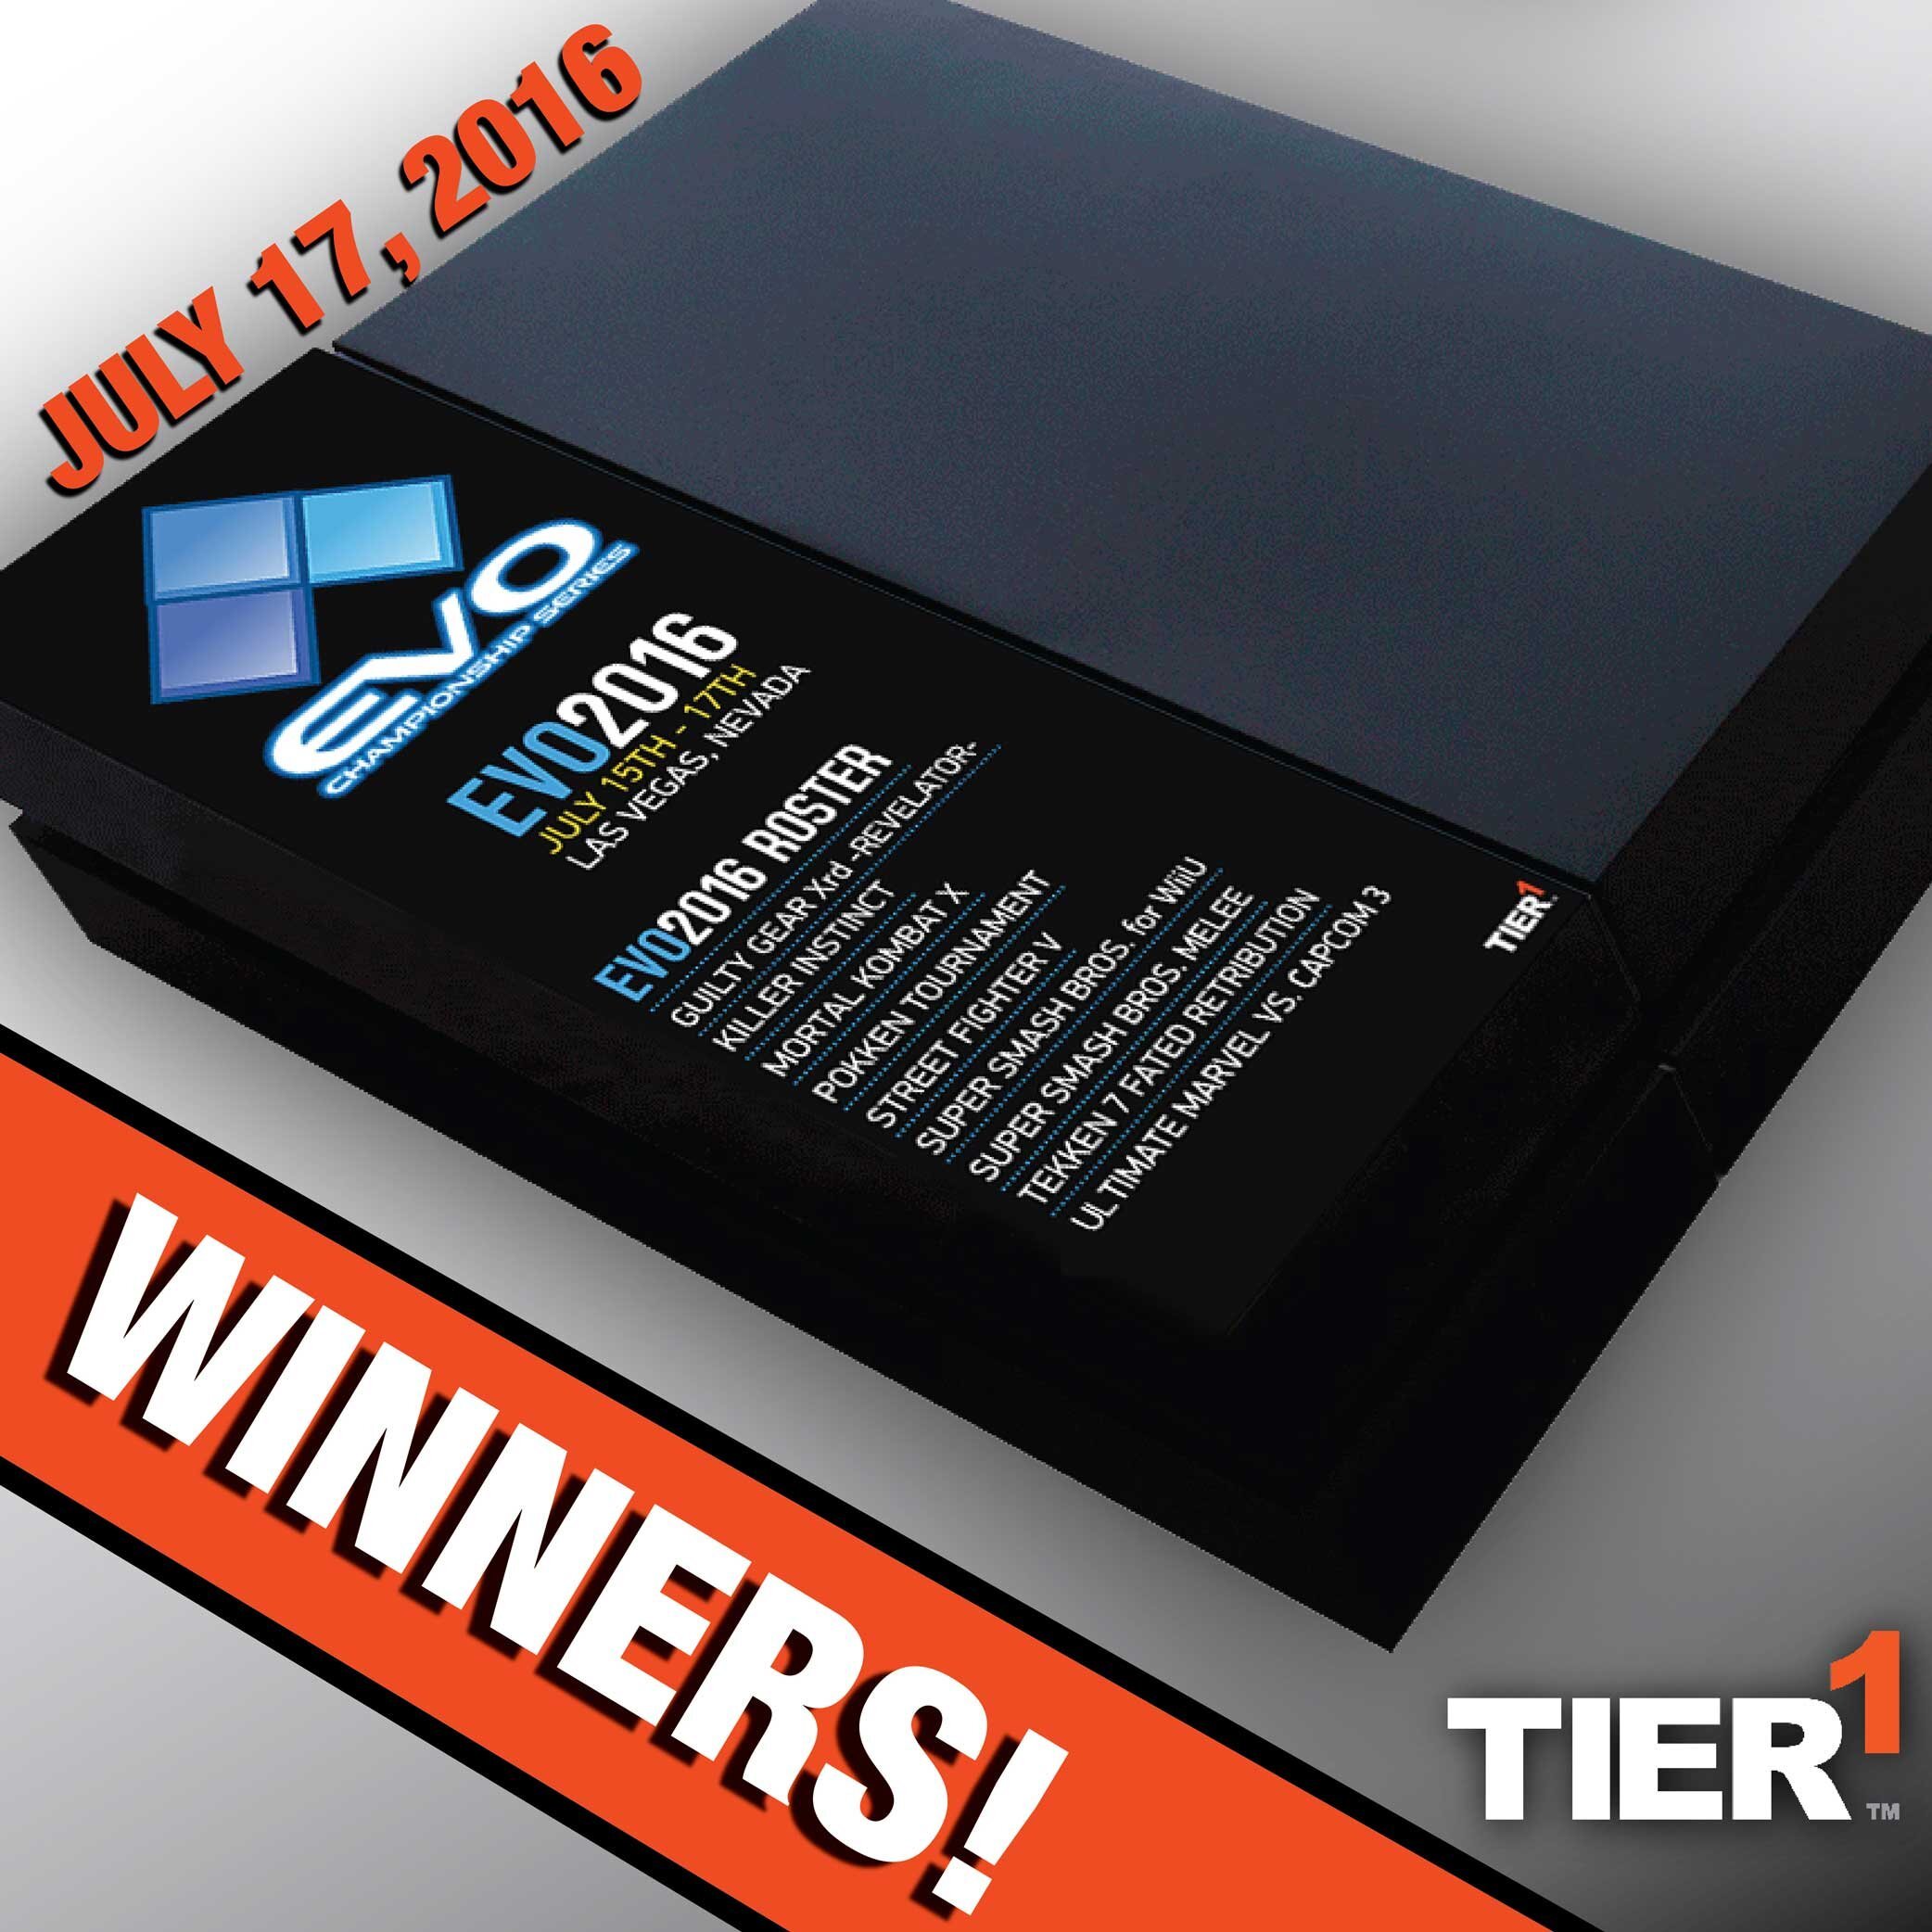 TIER1 EVO PS4 Faceplate Giveaway.jpg